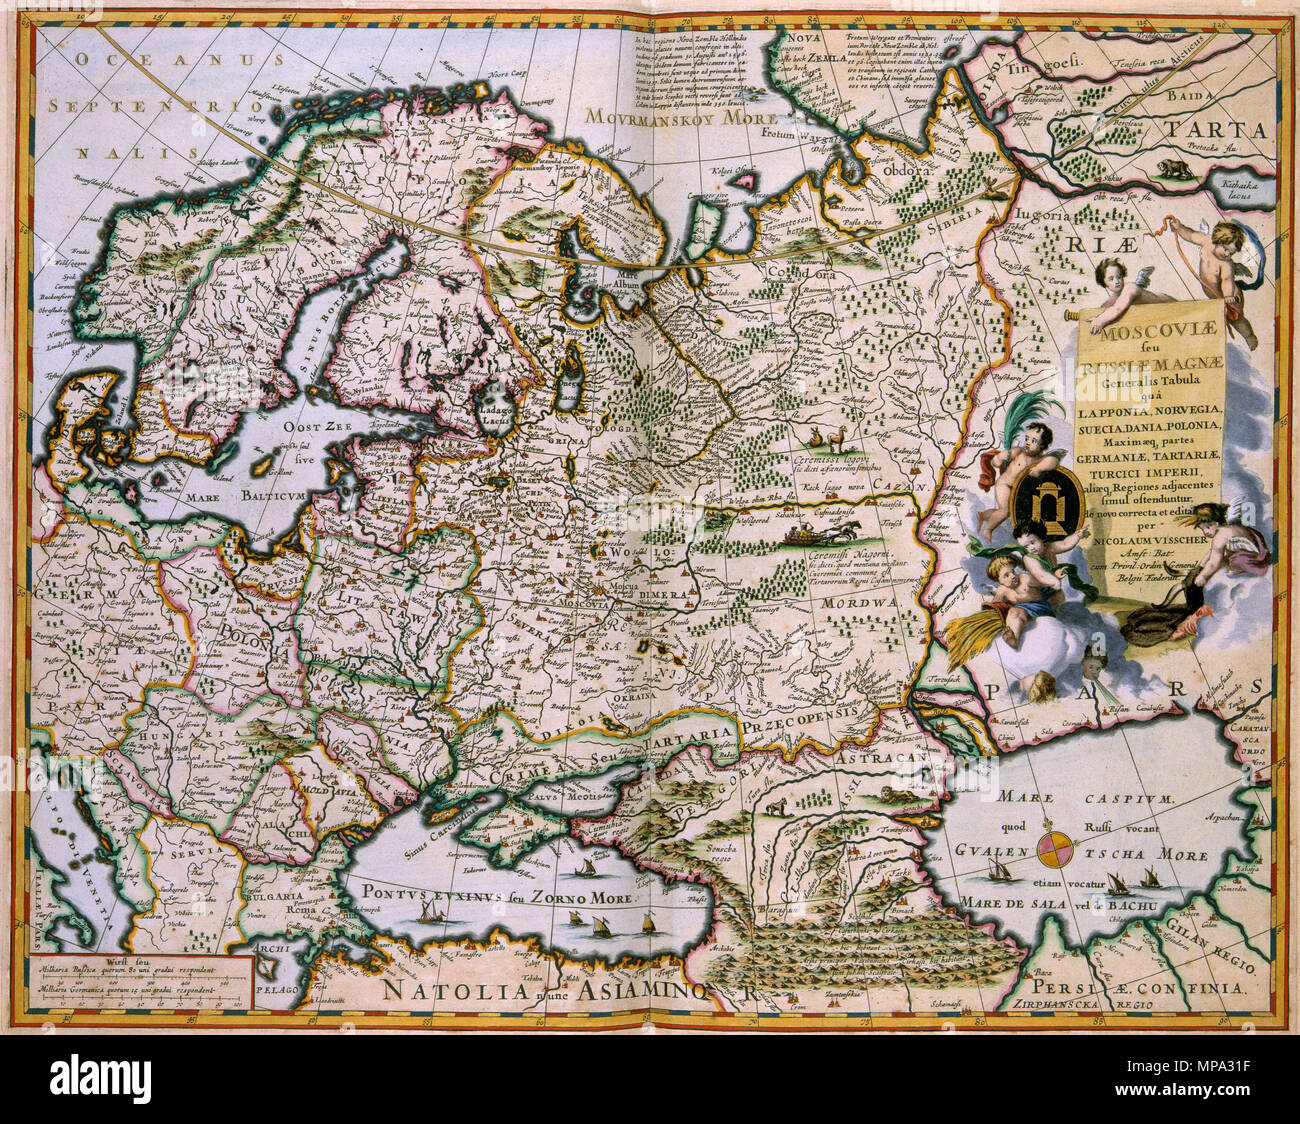 . Latina: MOSCOVIAE seu RUSSIAE MAGNAE Generalis Tabula quâ LAPPONIA, NORVEGIA SUECIA, DANIA, POLONIA, Maximaeq: partes GERMANIAE, TARTARIAE, TURCICI IMPERII, aliaeq: Regiones adjacentes simul ostenduntur de novo correcta et edita. This map of West-Russia was published at the end of the 17th century by Nicolaes Visscher II (1649-1702). Dutch and French maps from the middle of the 17th century English: Map of Russia by Nicolaas Visscher II (1649-1702) Русский: Карта России Николааса Фишера II (1649-1702) . 1681. Nicolaas Visscher II (1649-1702) 1241 Visscher Moscoviae seu Russiae magnae general Stock Photo